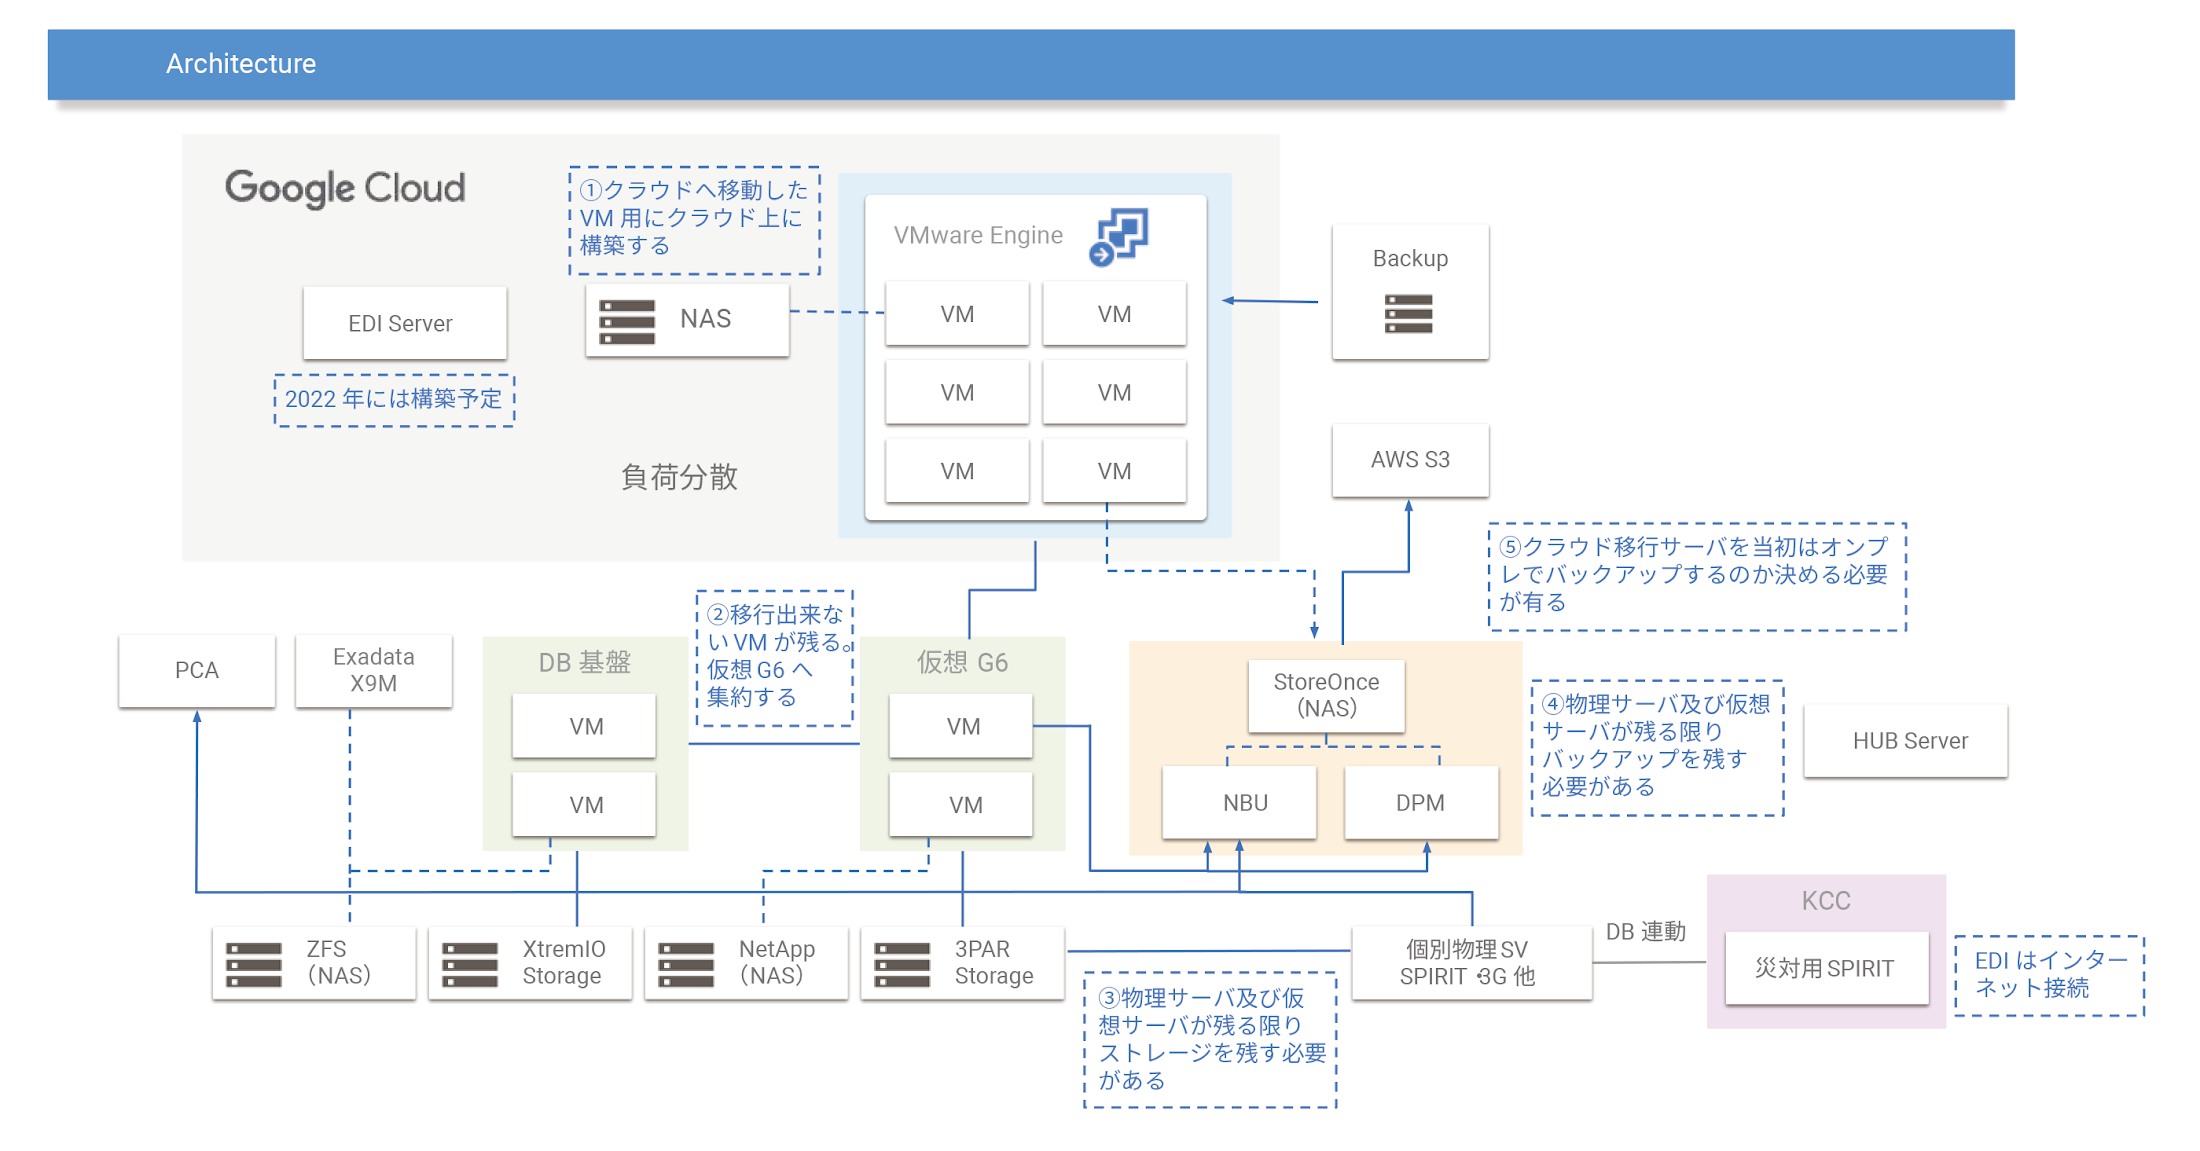 https://storage.googleapis.com/gweb-cloudblog-publish/images/Asahi-group-holdings_architecture.max-2200x2200.png